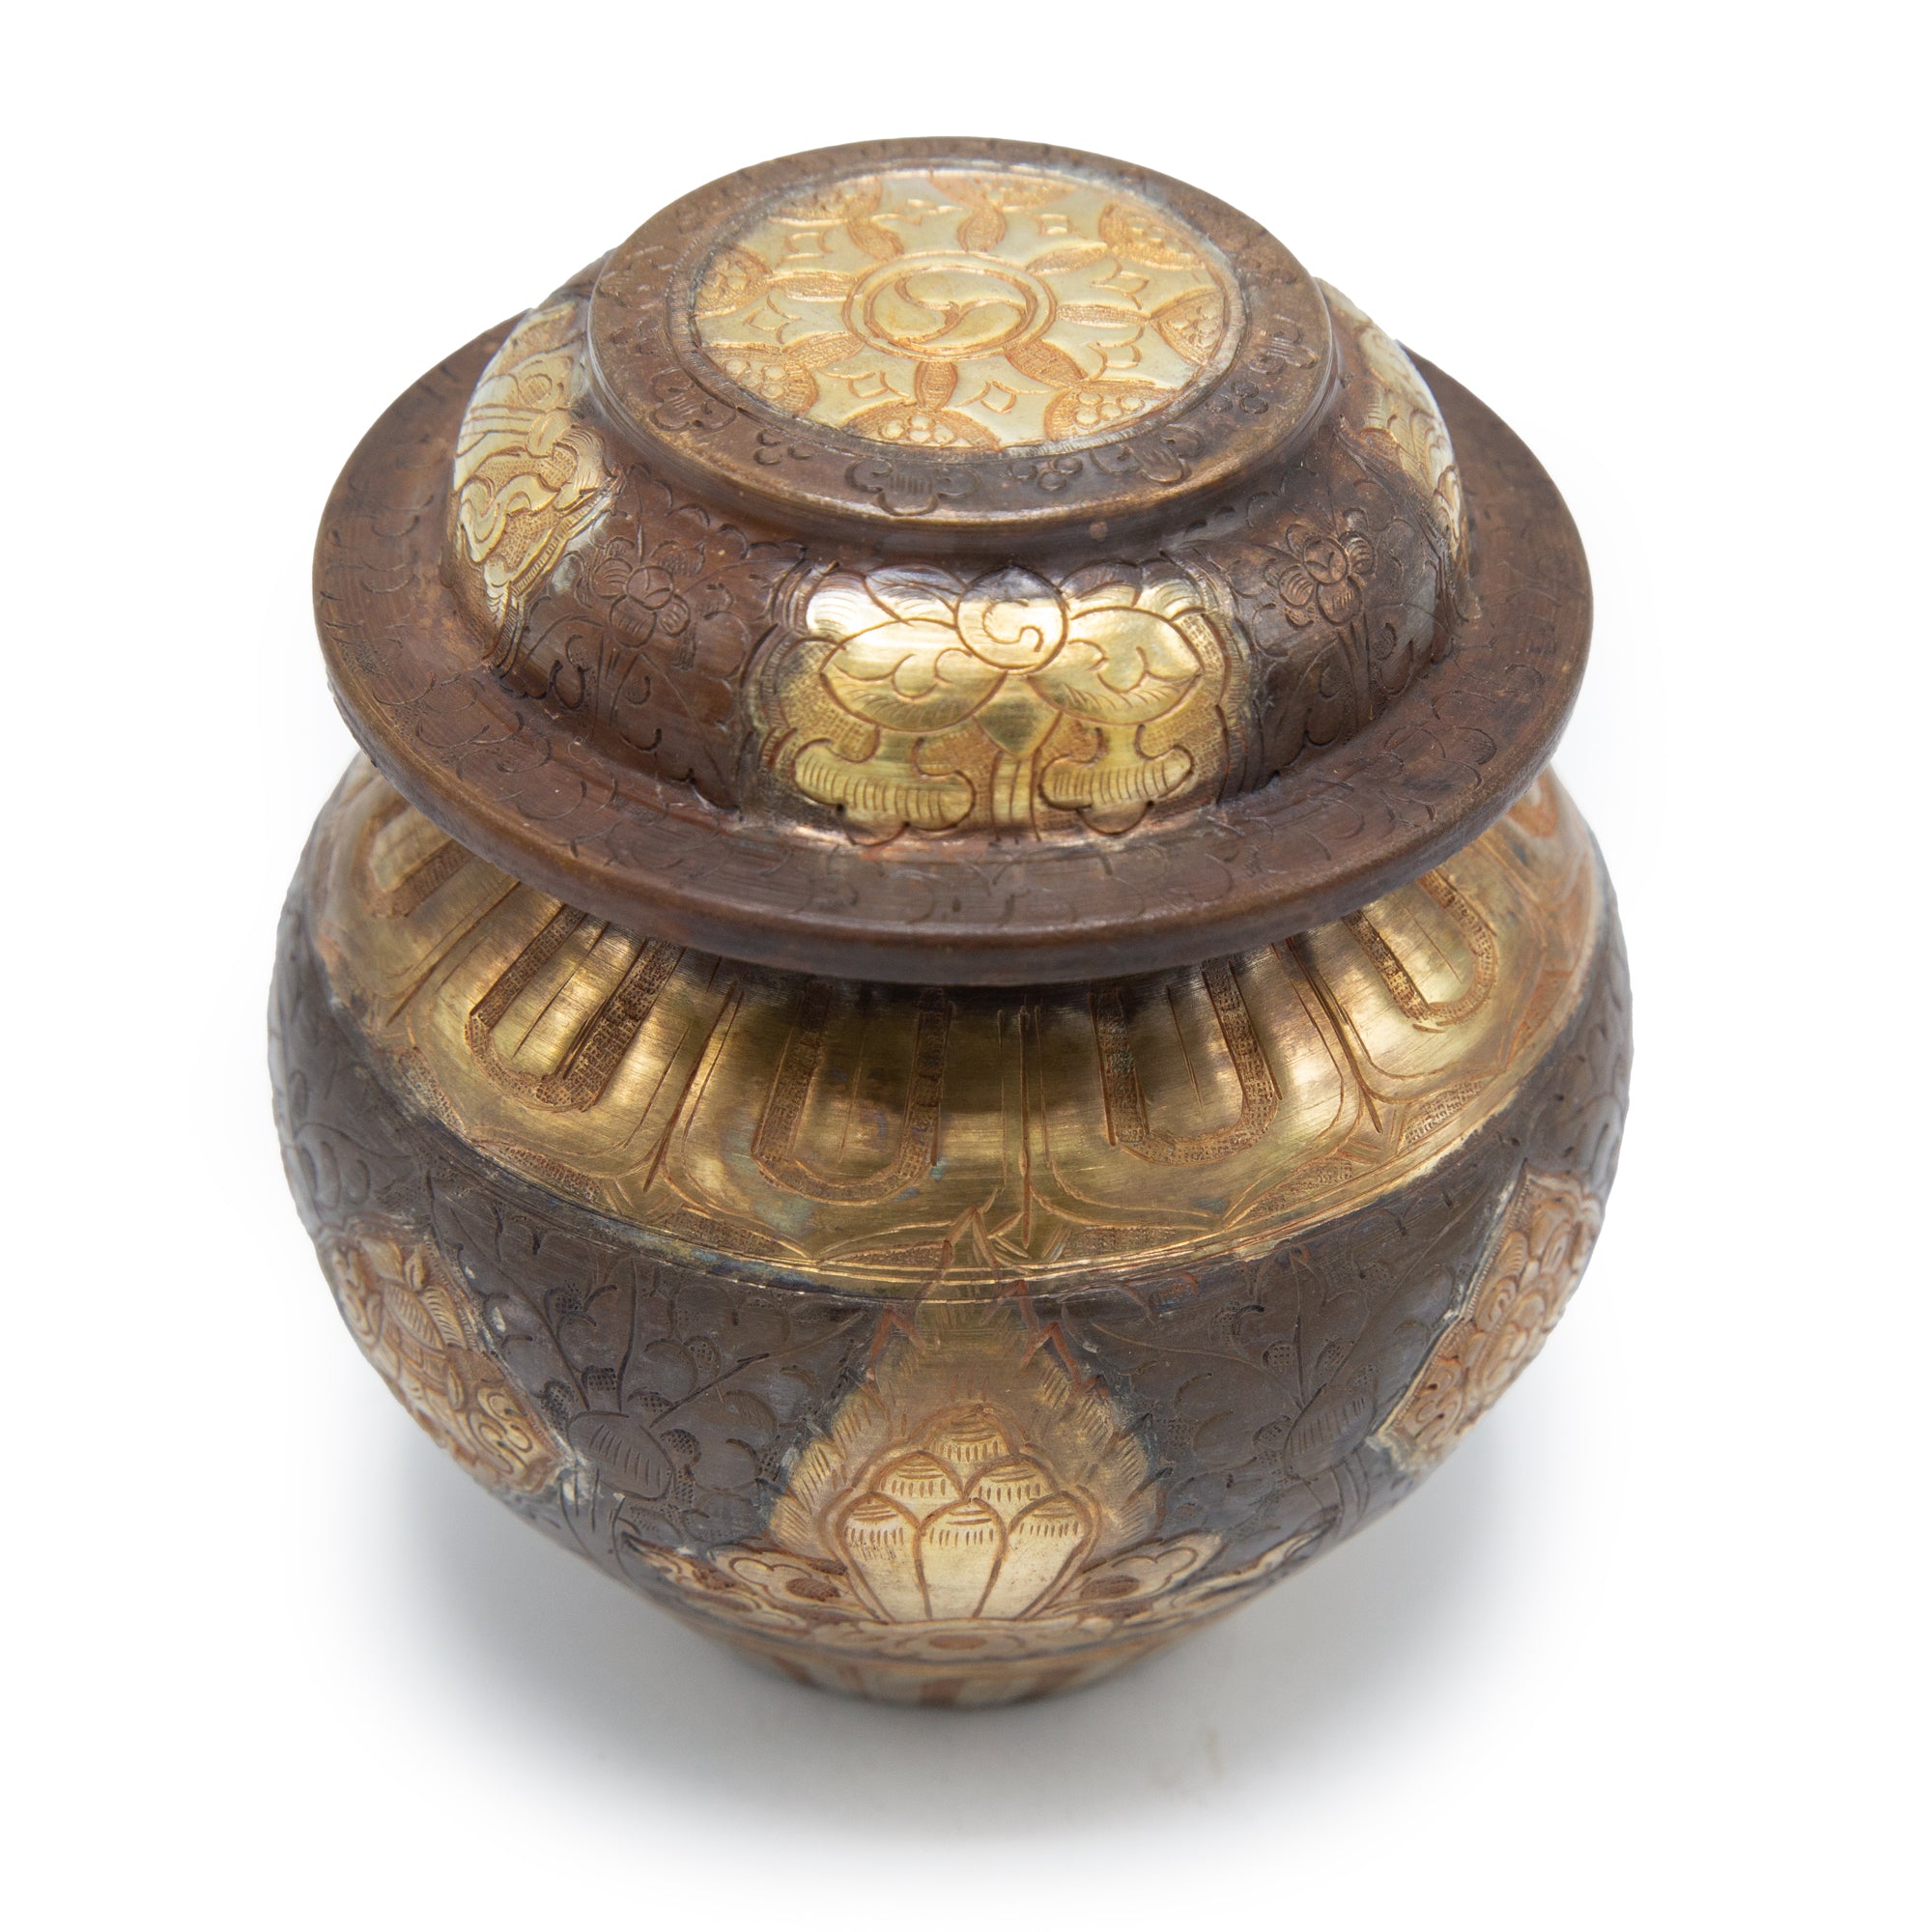 Copper and Gold Treasure Vase - 4.5 inch